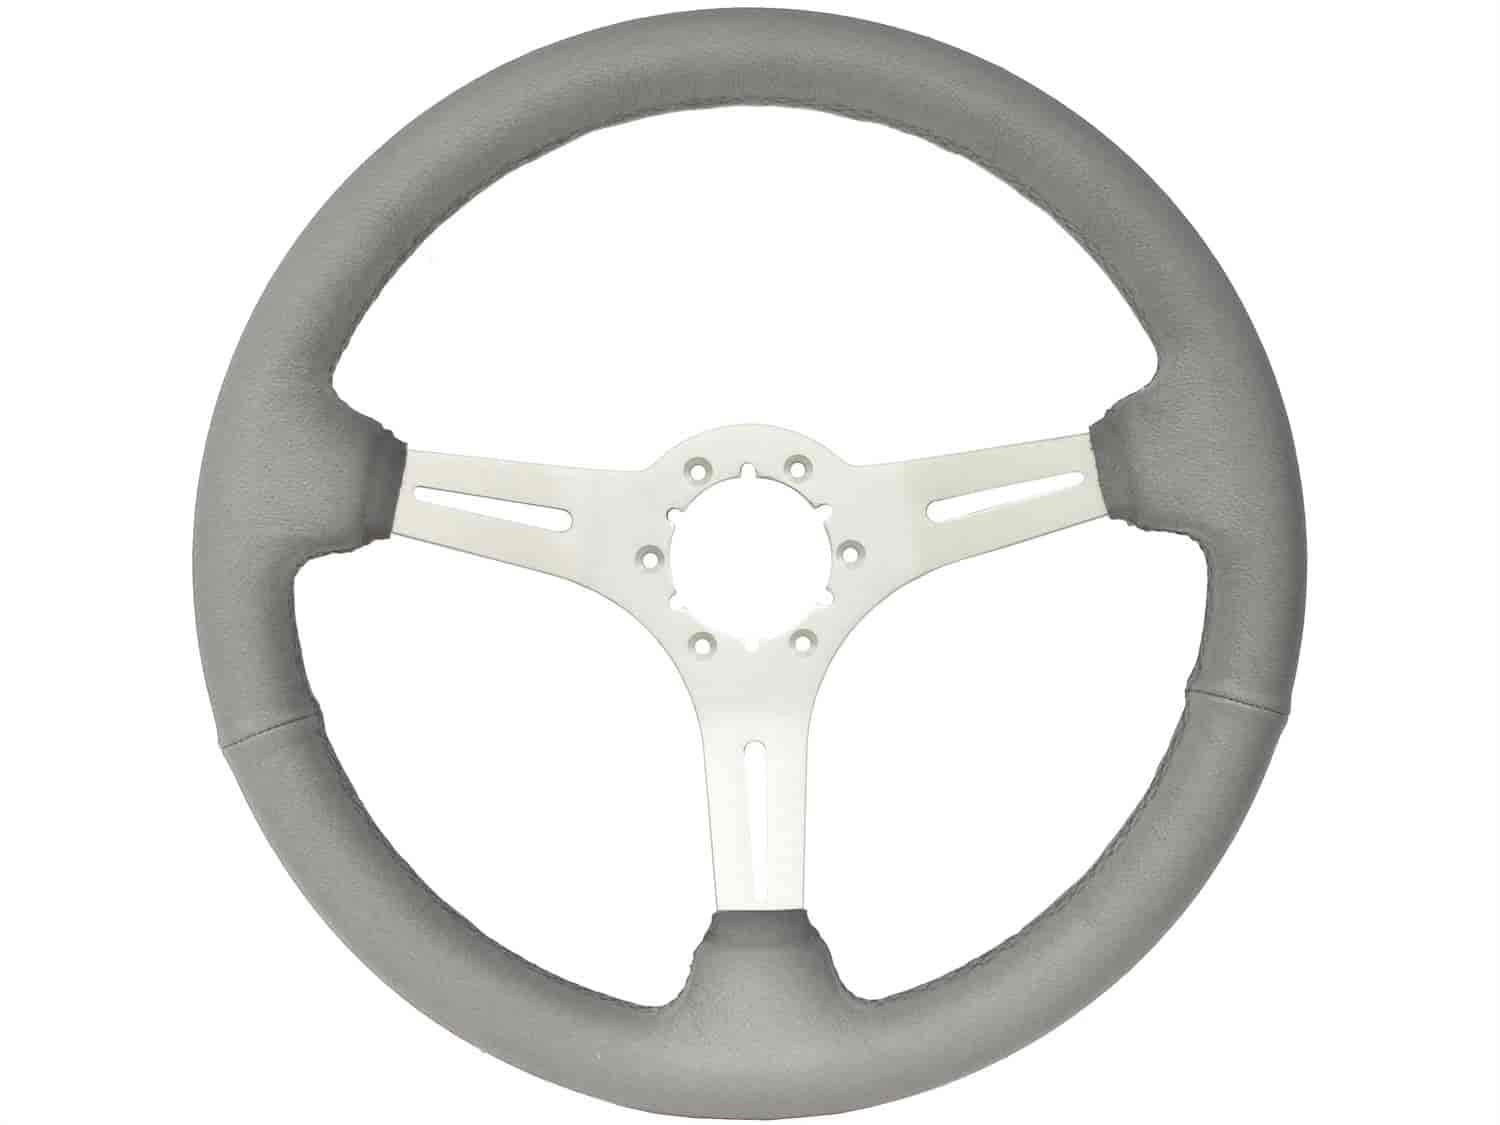 S6 Sport Steering Wheel, 14 in. Diameter, Premium Gray Leather Grip